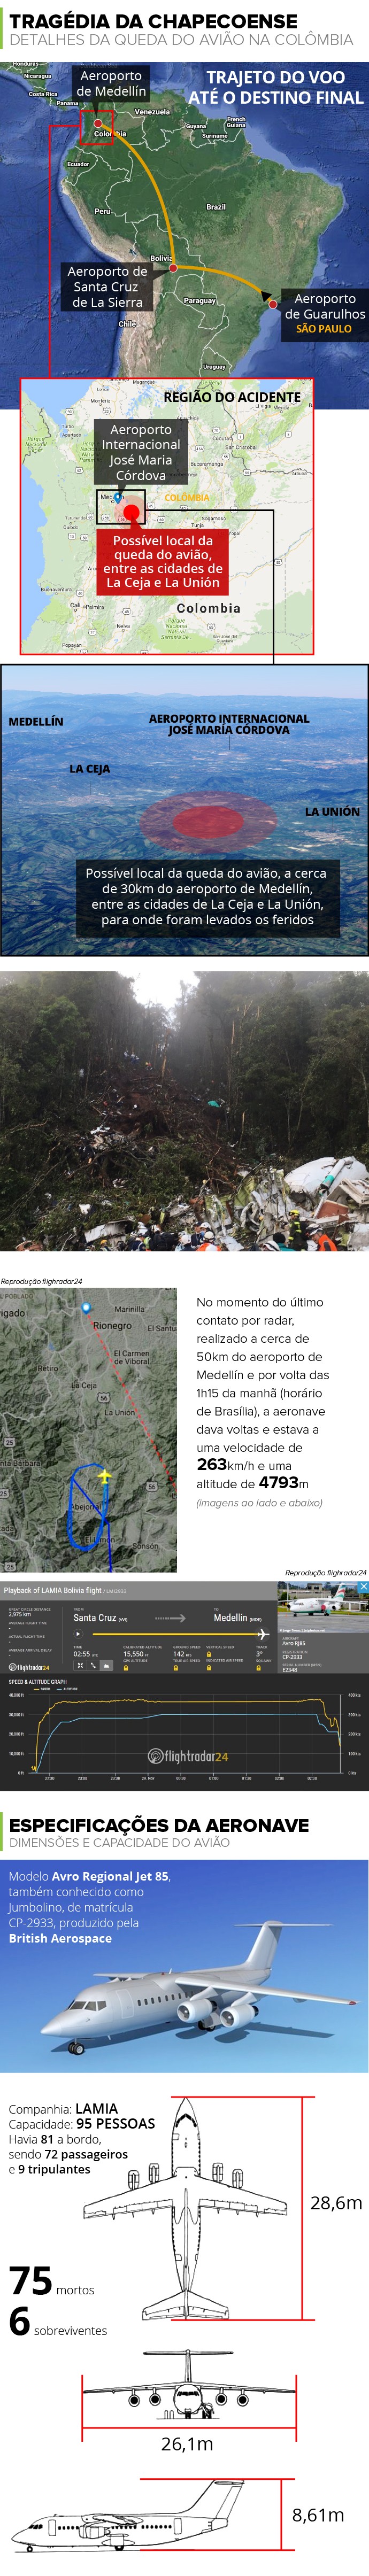 Info-QUEDA-AVIAO-Chapecoense-I (Foto: infoesporte)